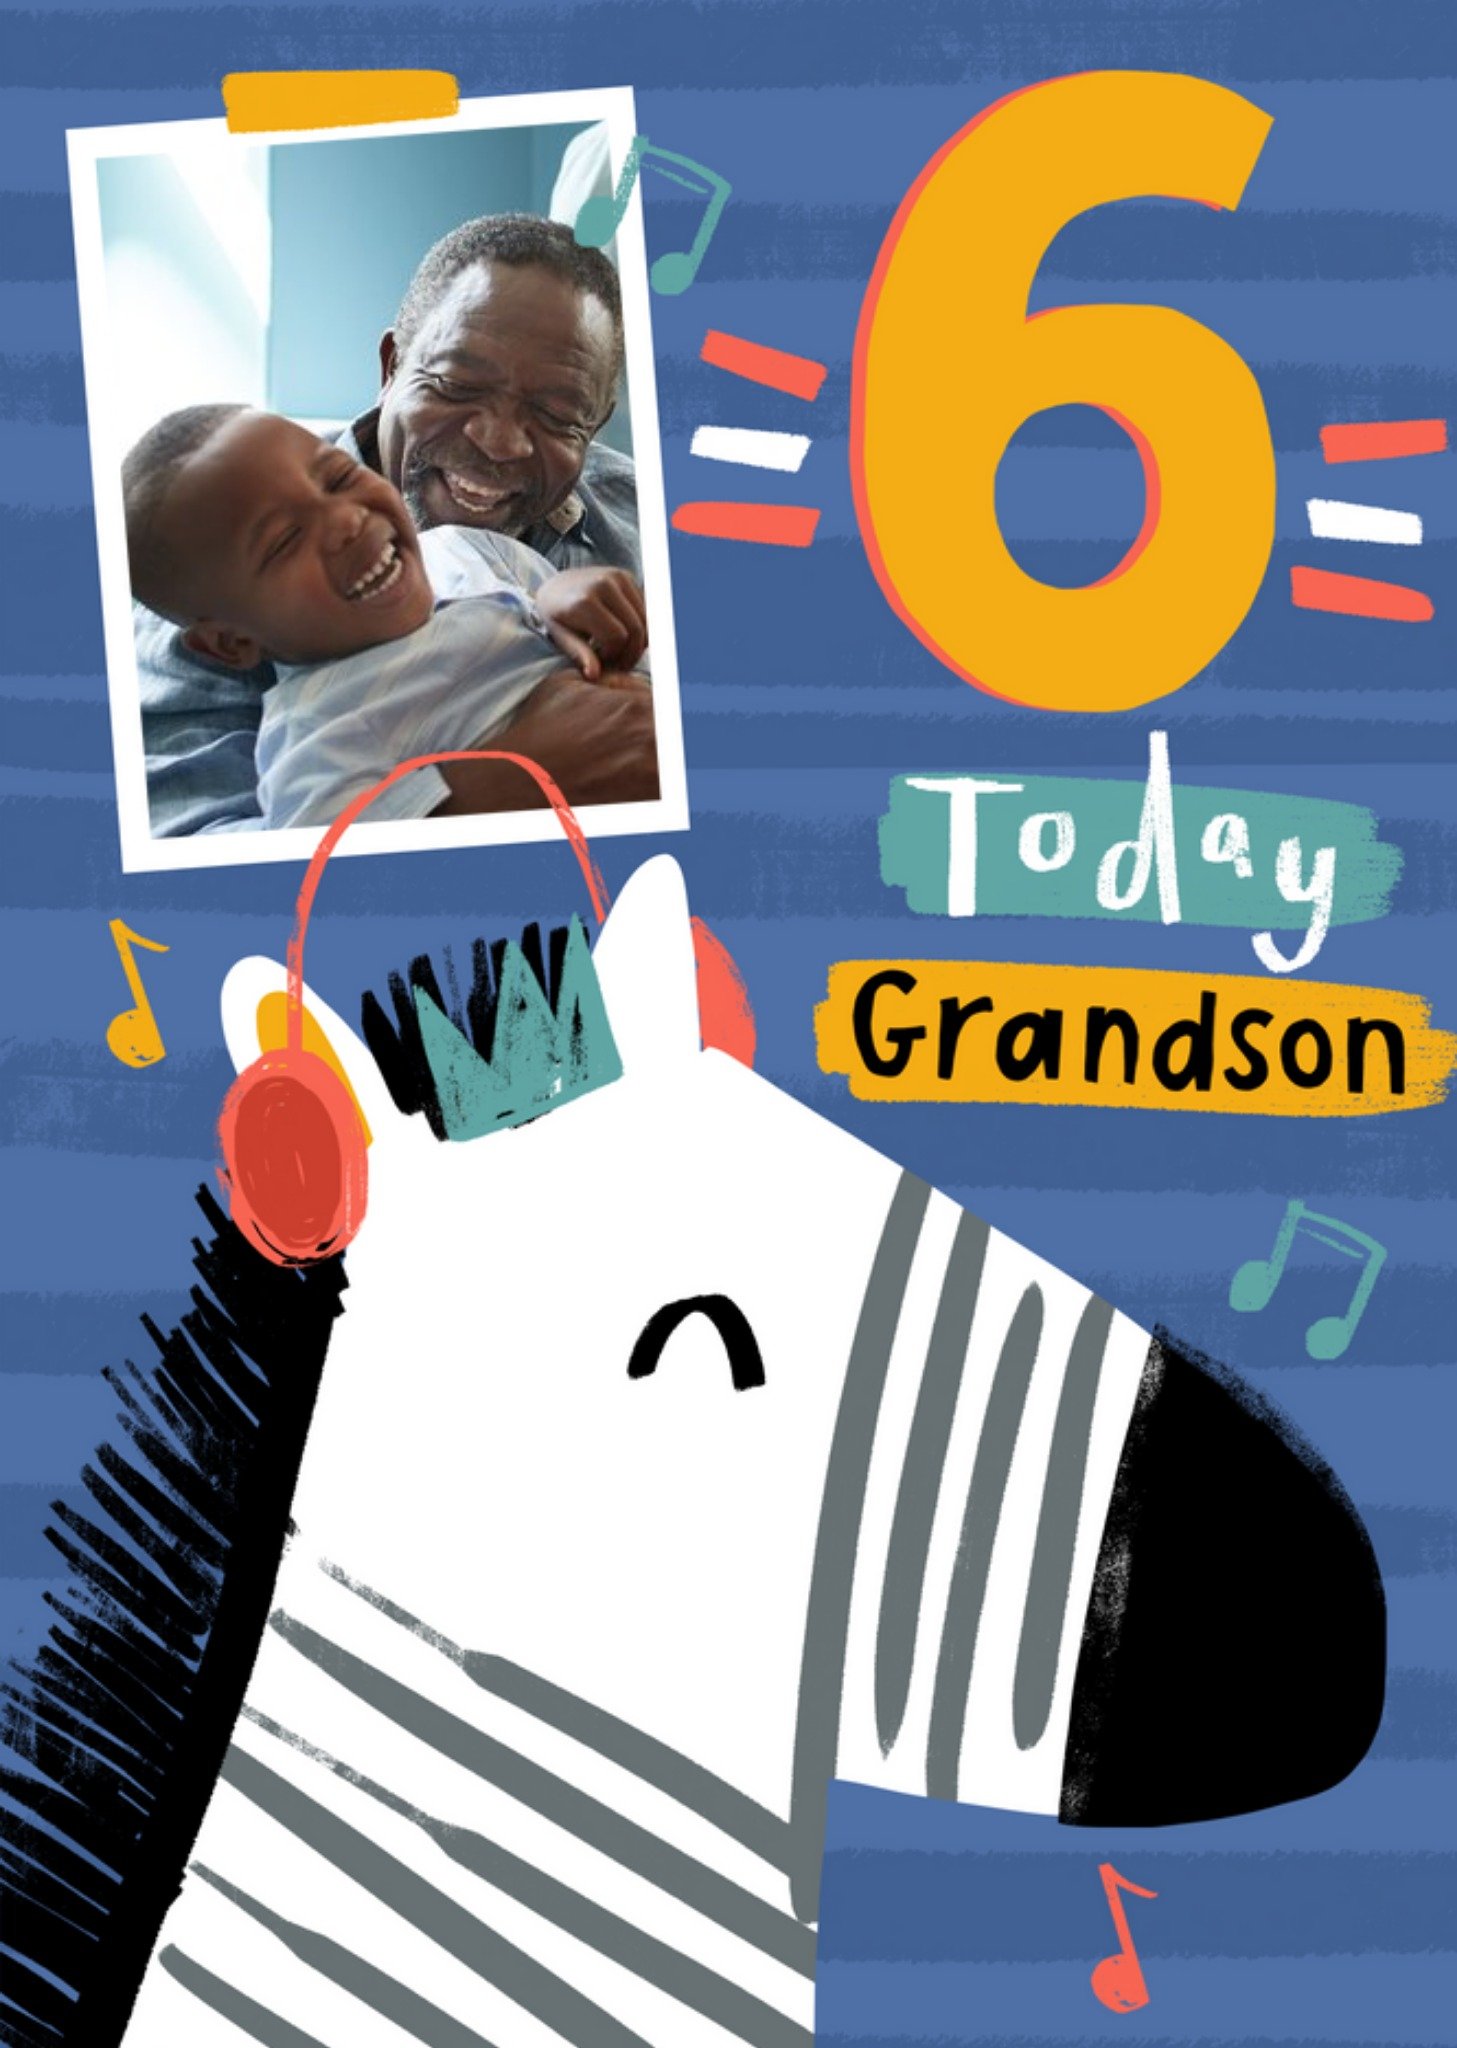 Moonpig Zebra 6 Today Grandson Photo Upload Birthday Card, Large